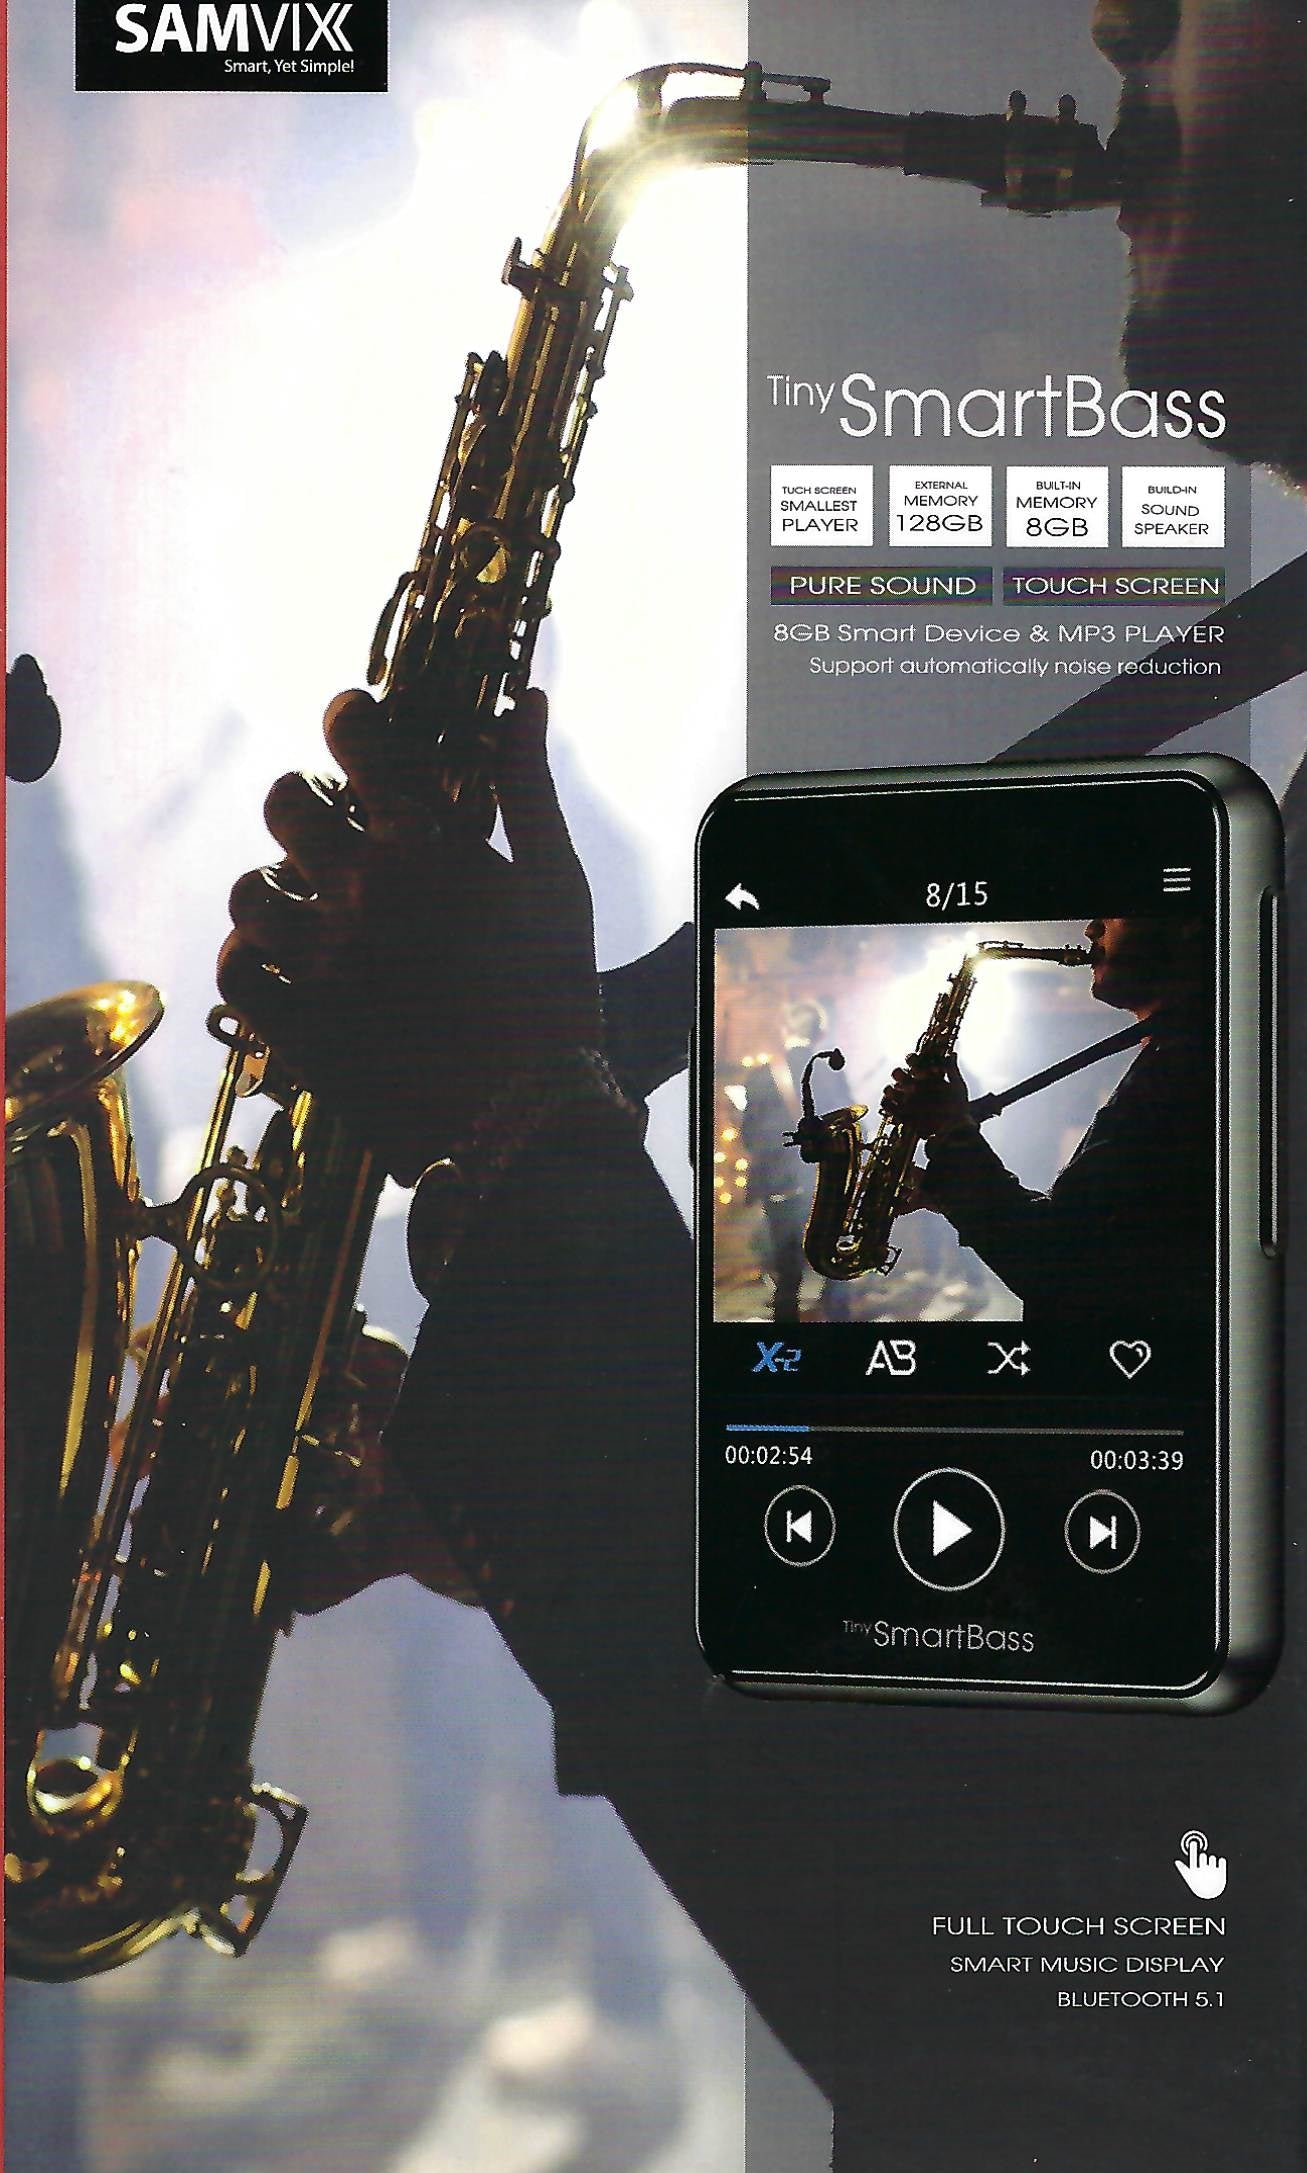 Samvix - TINY Smart Bass MP3 Player - 8GB